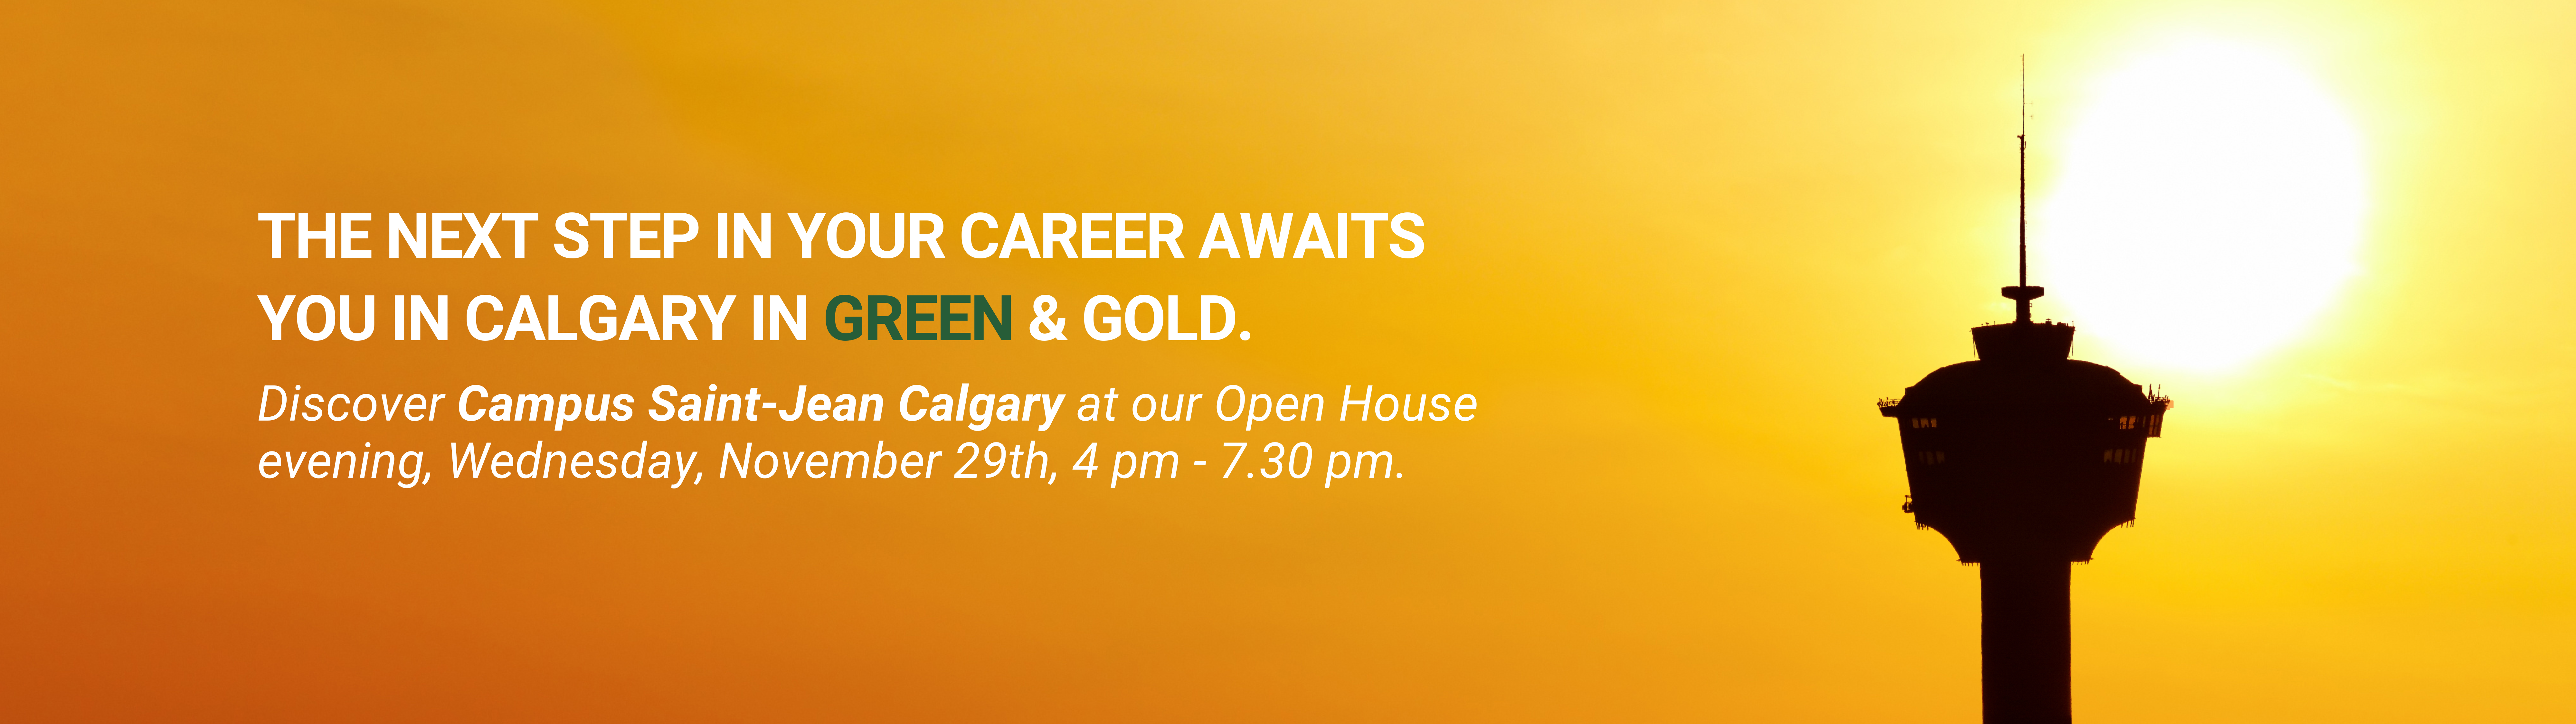 Campus Saint-Jean Calgary Open House, Wednesday, November 29, 4:00-7:30 p.m.